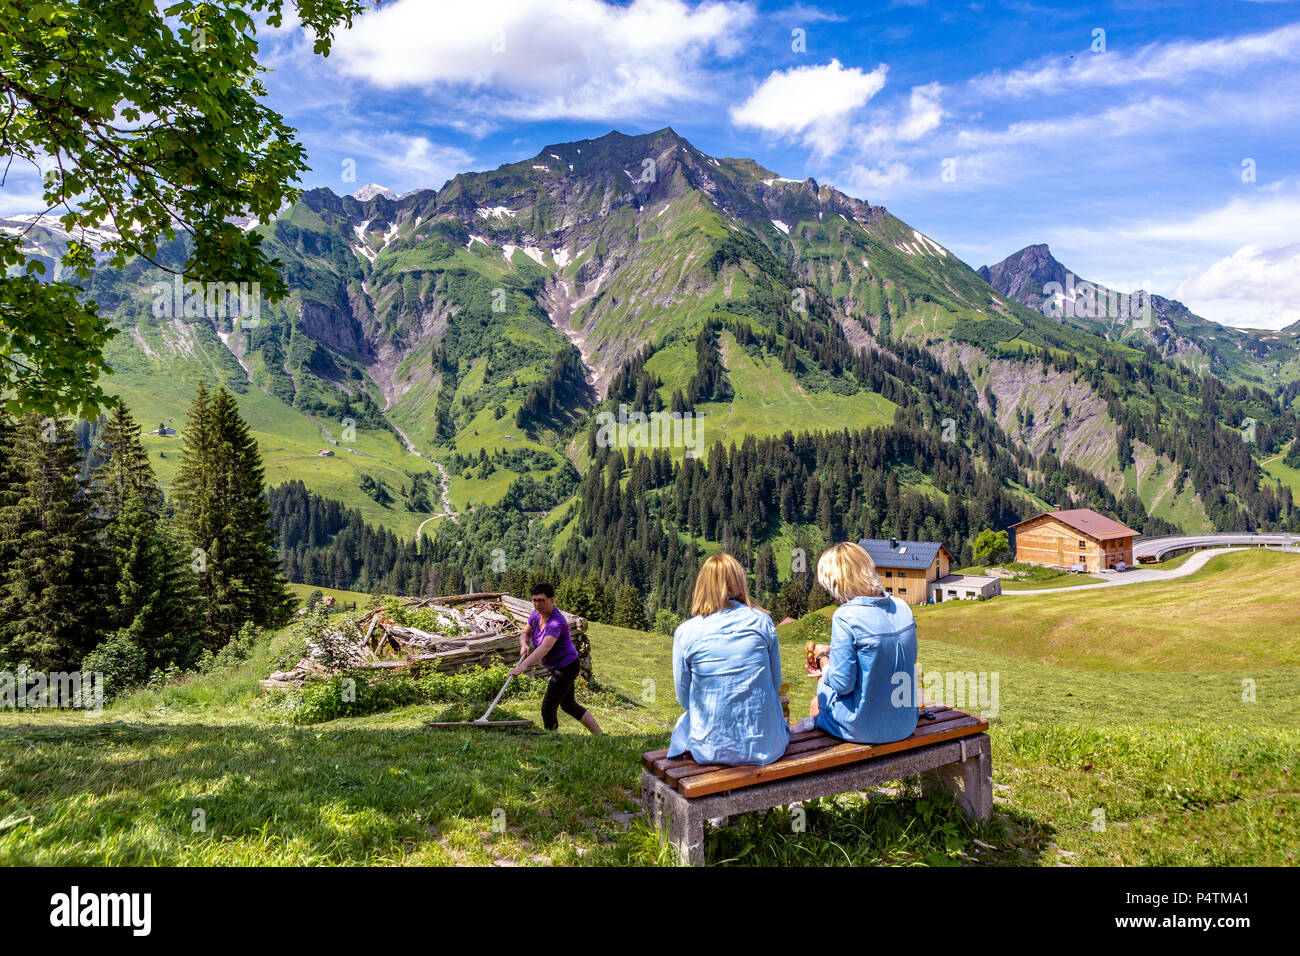 The Austrian Alps near Schrocken in the Vorarlberg region of the country. Stock Photo